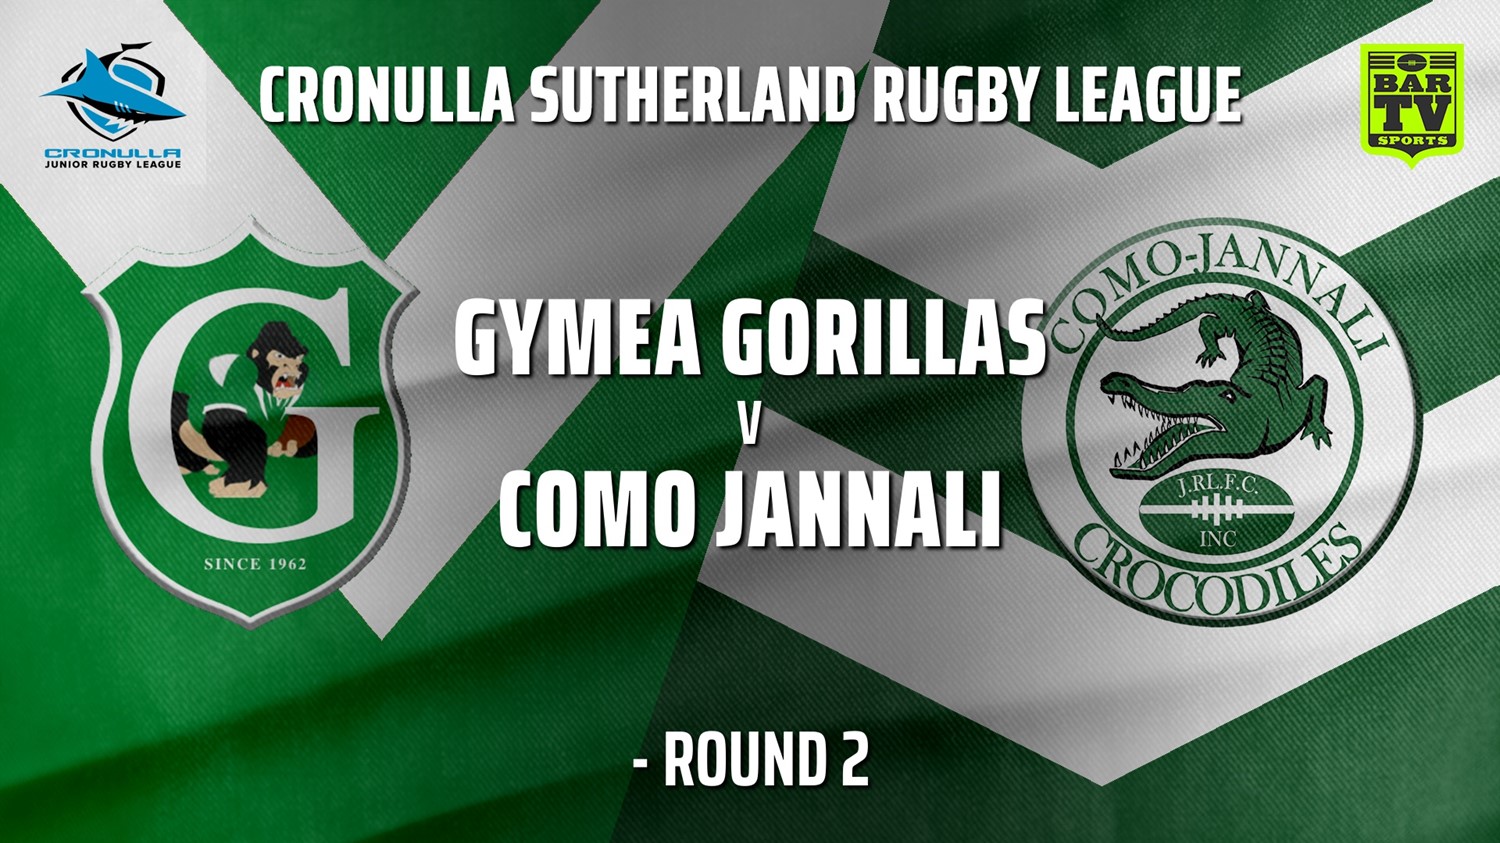 210508-Cronulla JRL Southern Open Age GOLD Round 2 - Gymea Gorillas v Como Jannali Crocodiles (1) Minigame Slate Image